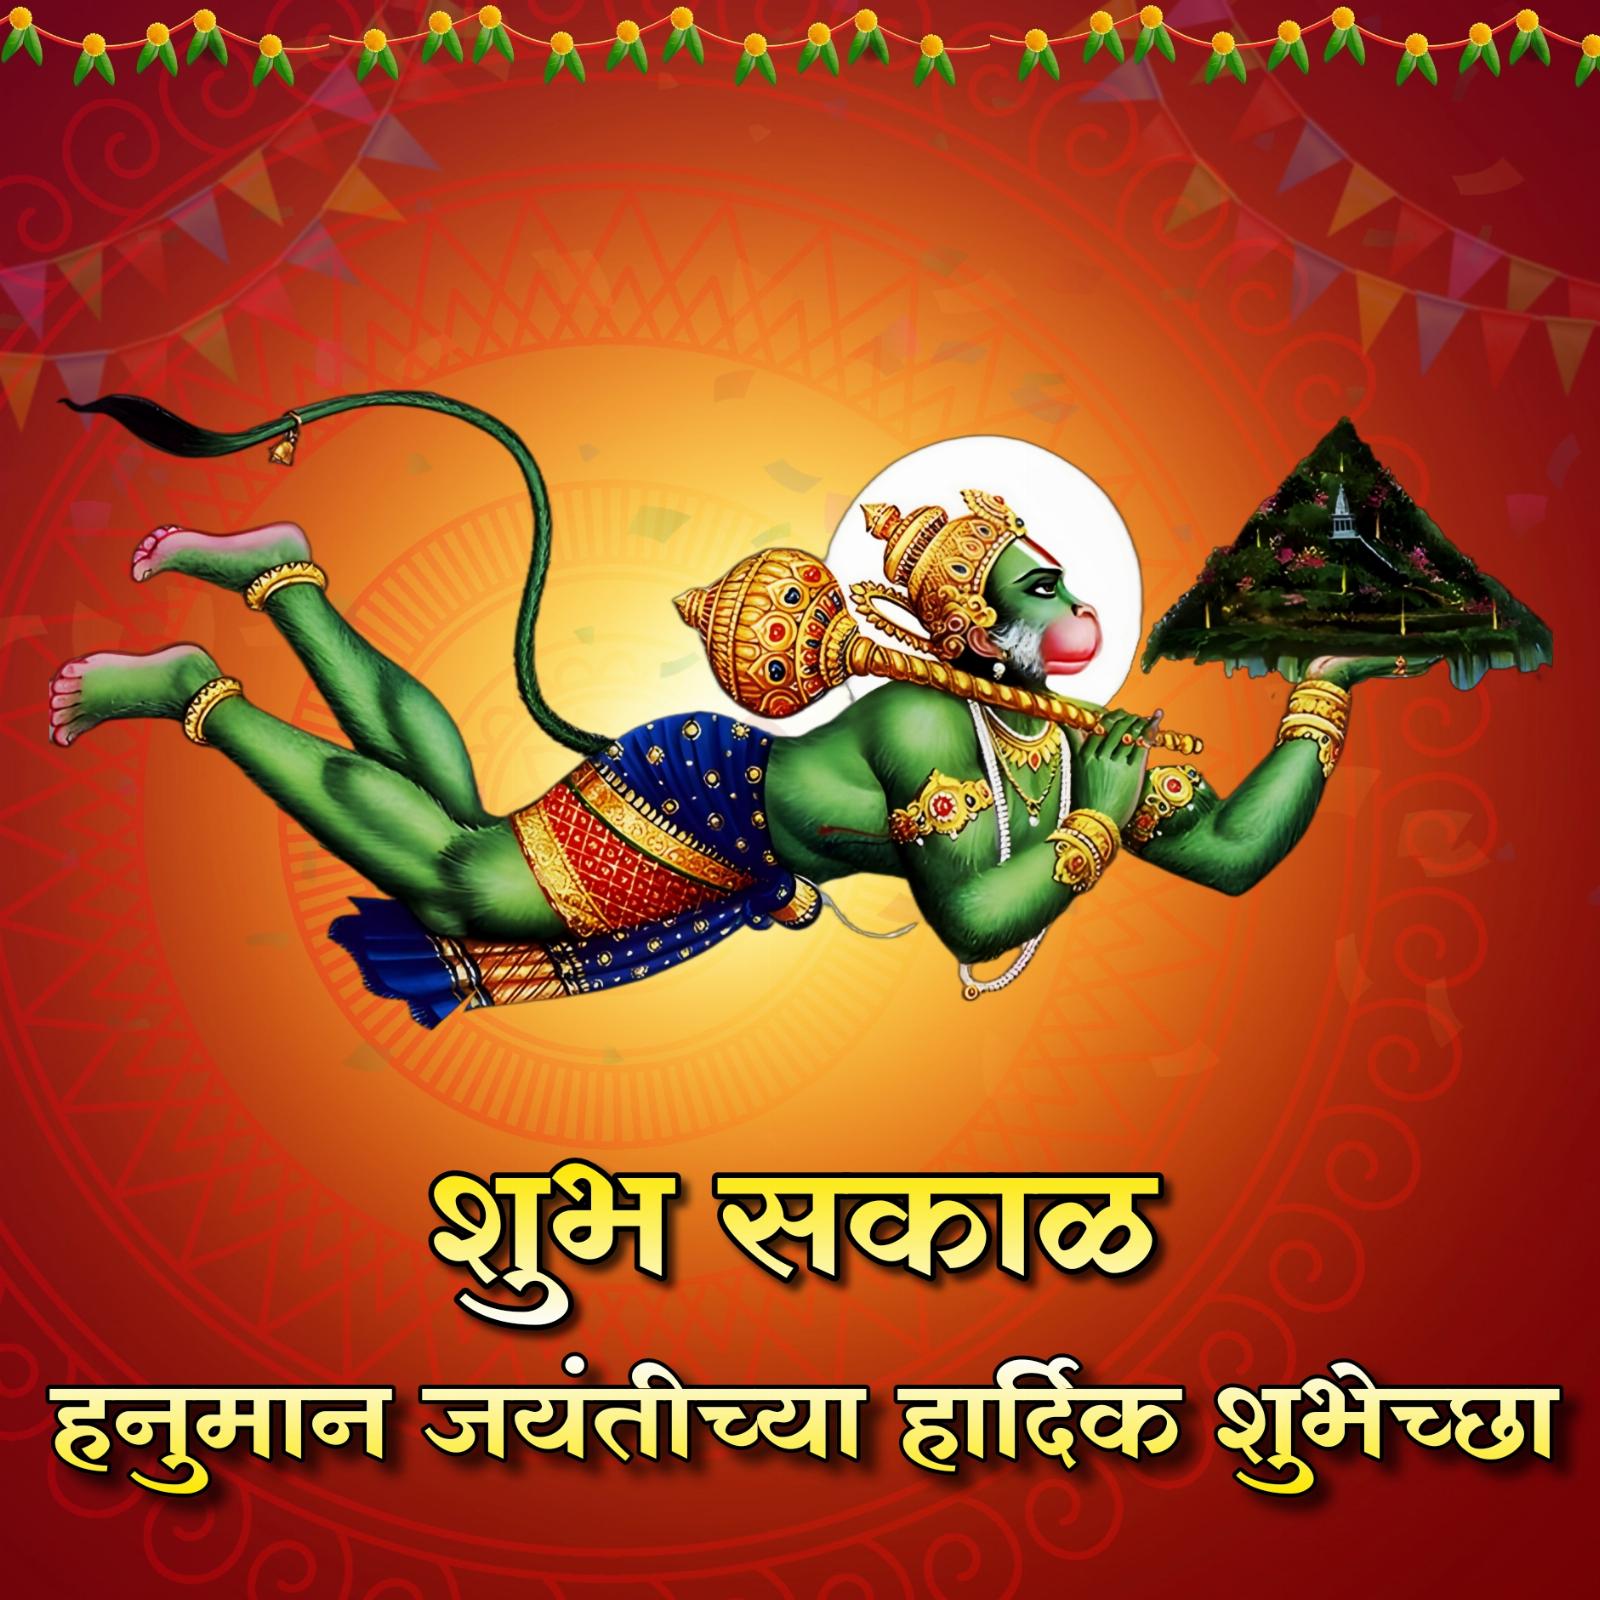 Shubh Sakal Hanuman Jayanti Chya Hardik Shubhechha Images in Marathi